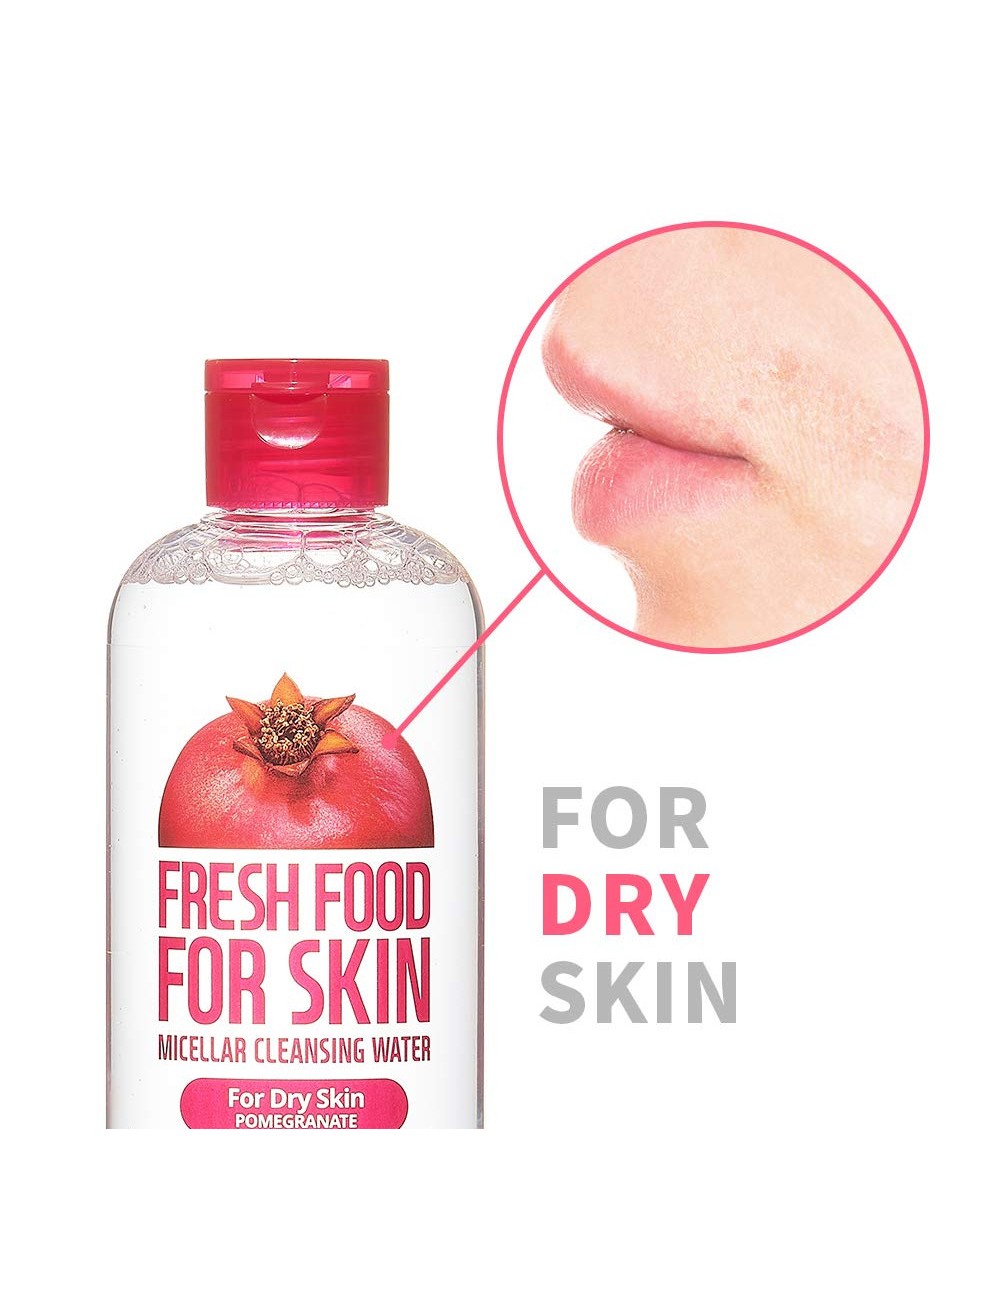 Limpiadoras - Exfoliantes al mejor precio: Fresh Food For Skin Micellar Cleasing Water Pomegranate - Piel Seca de FarmSkin en Skin Thinks - Piel Seca